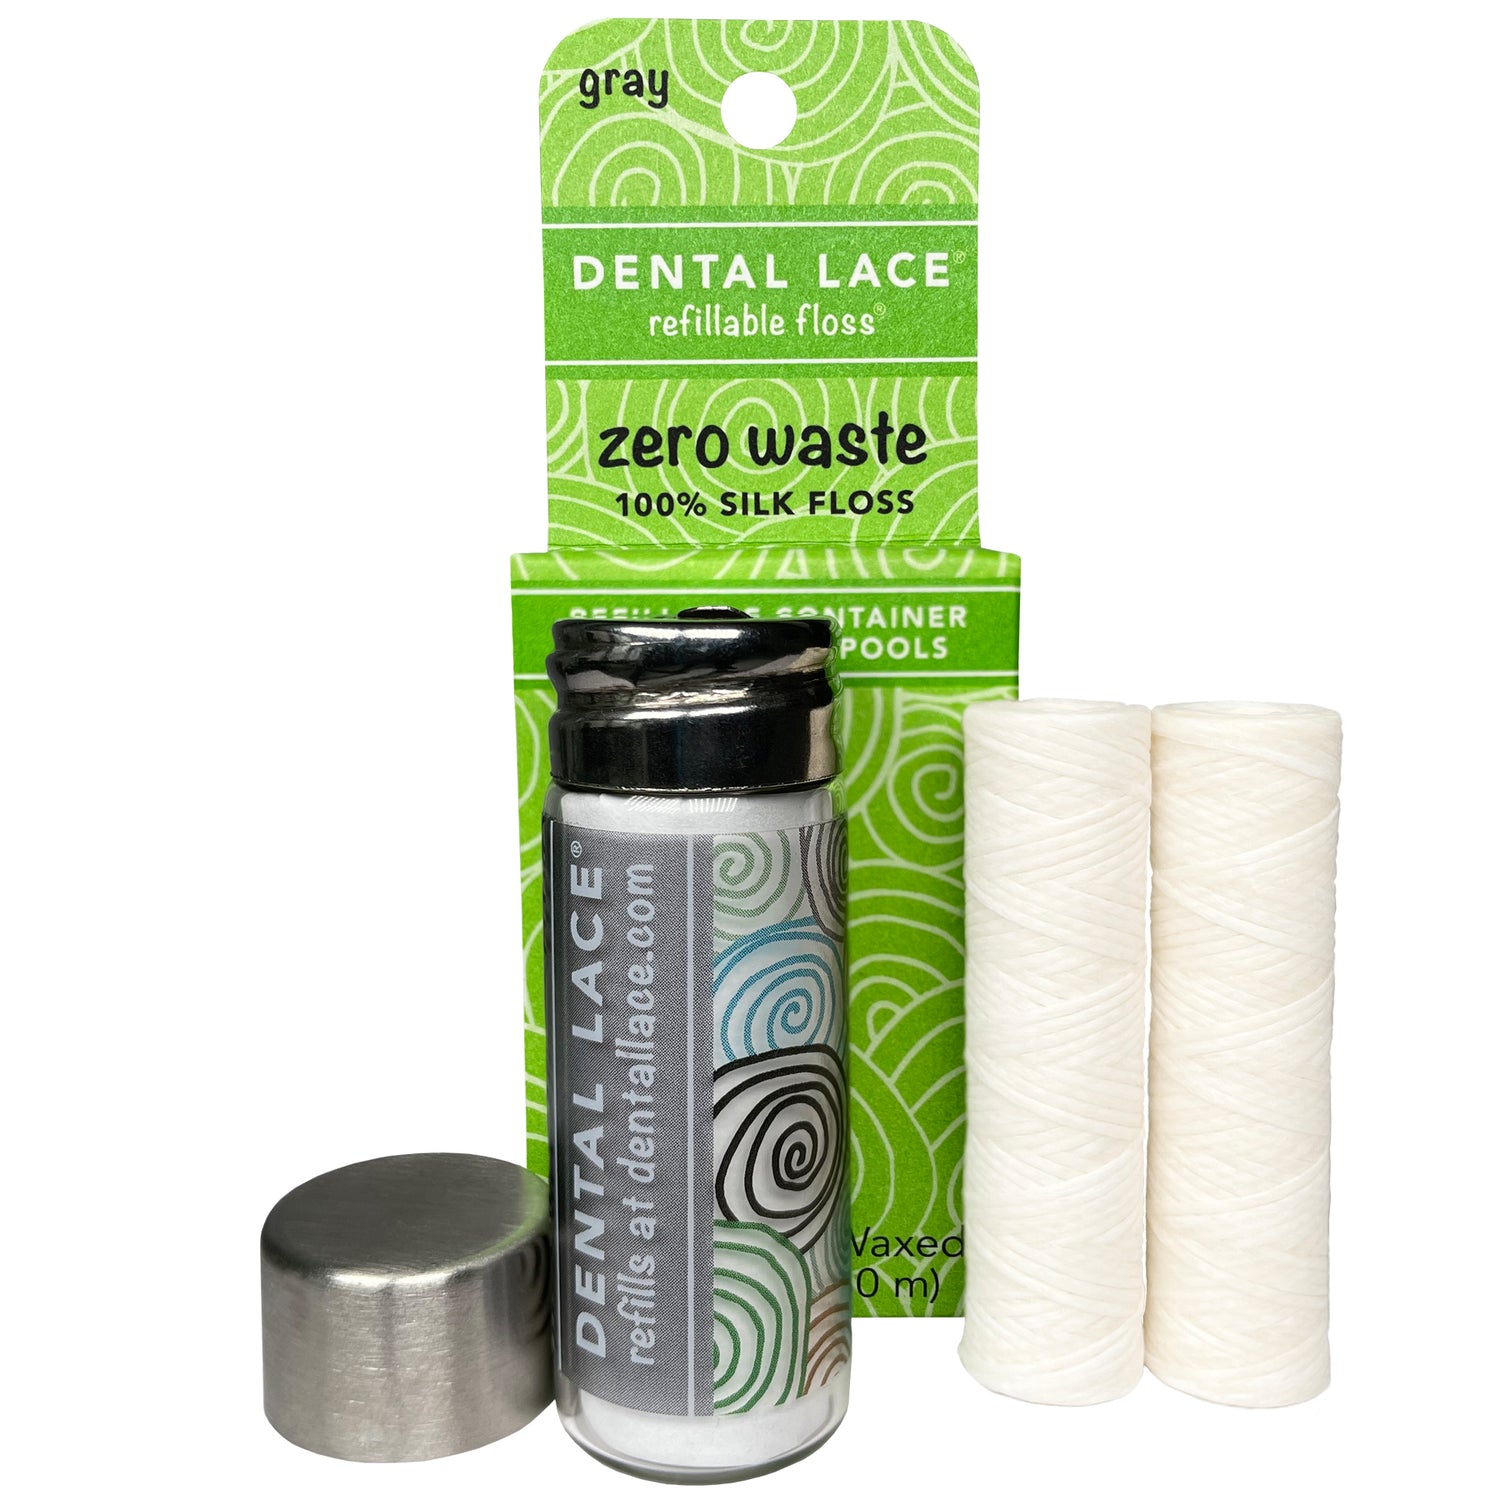 Dental Lace, Plastic Free floss